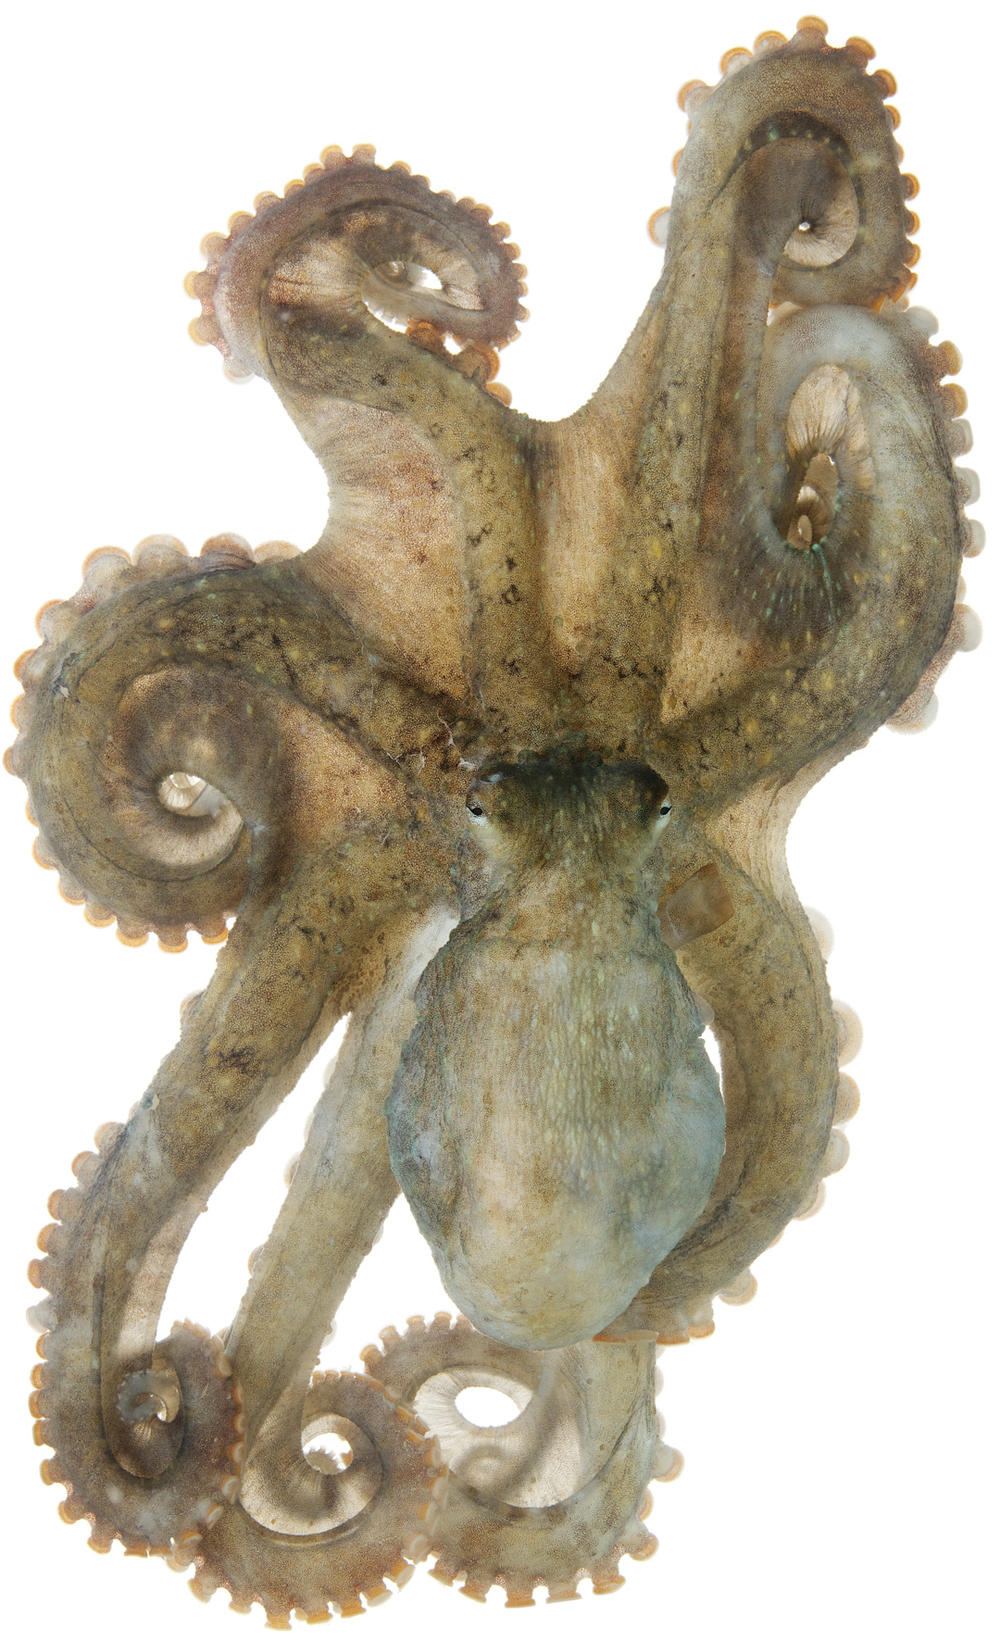 Rock Tako Octopus oliveri Specimen No. 3; mantle is 2.25 inches long; Kewalo Basin Harbor, Honolulu, Hawaii, United States